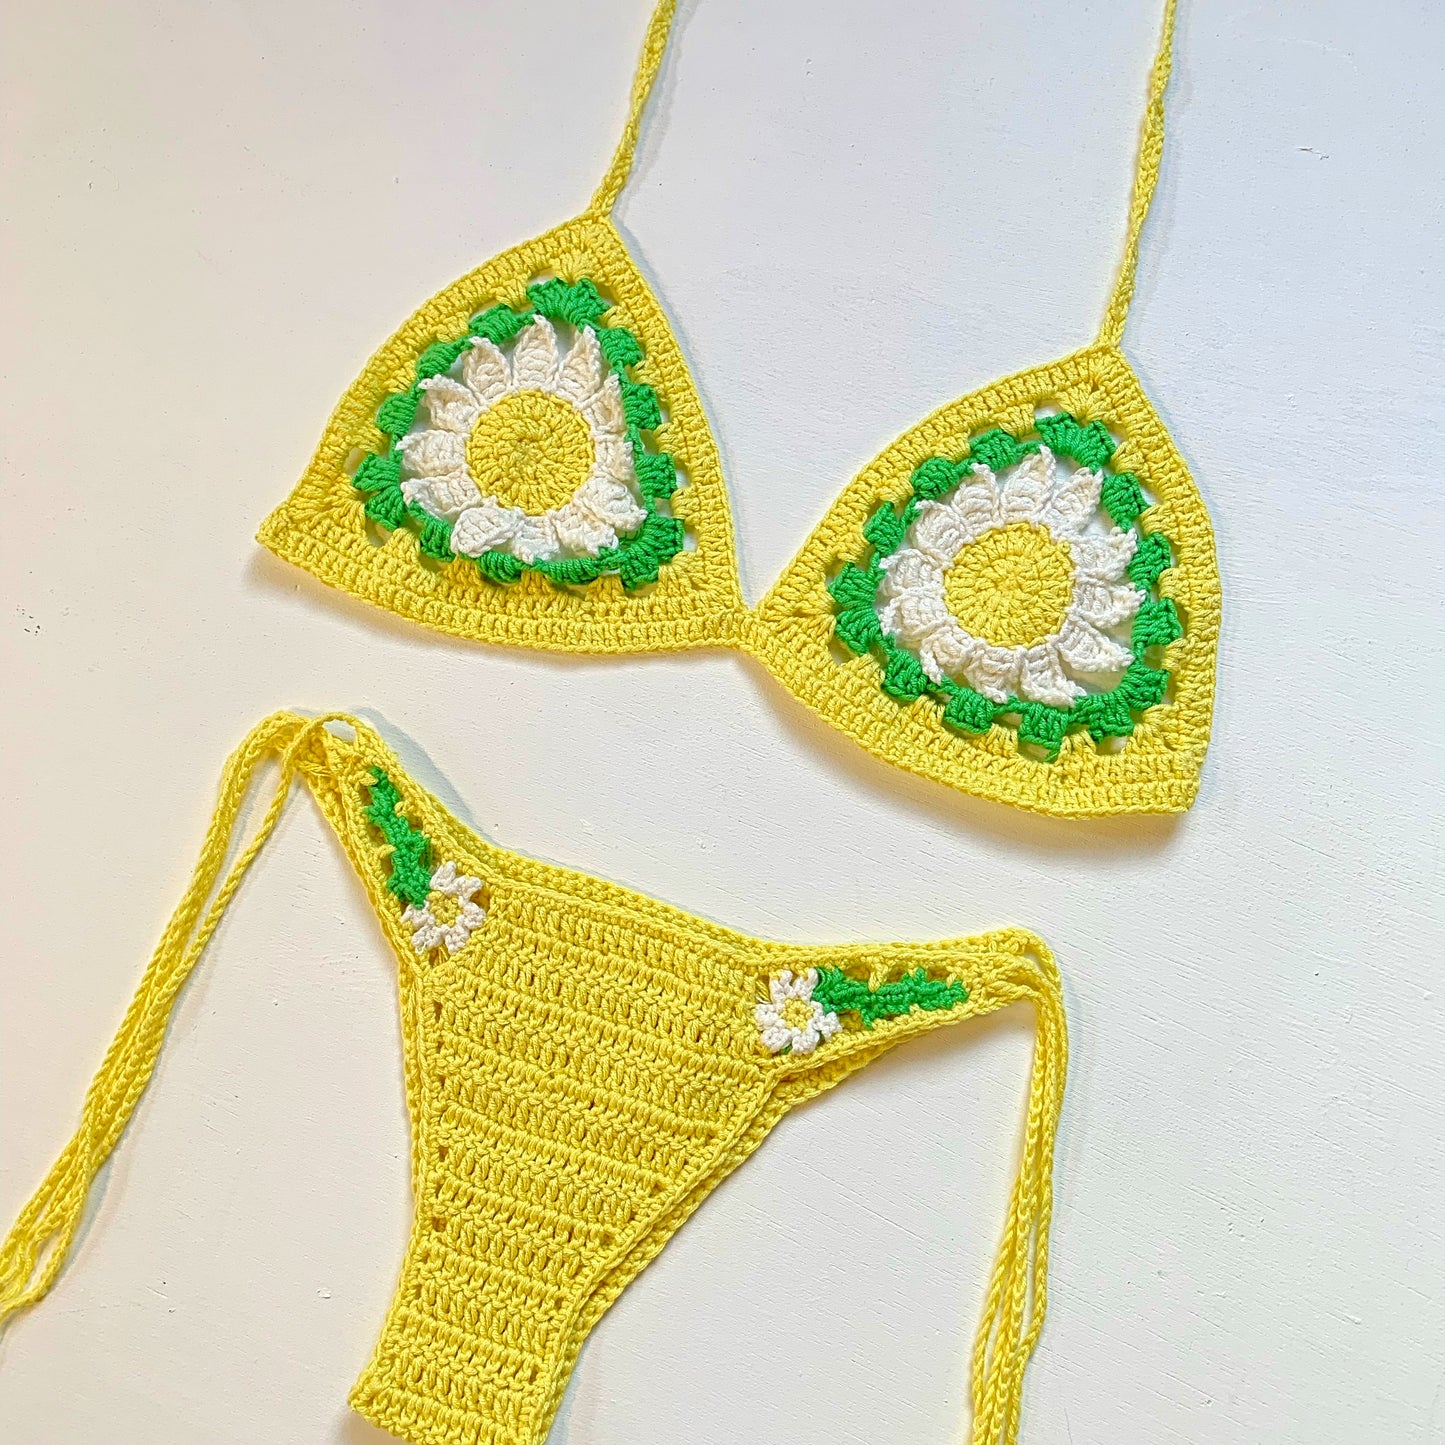 Darcy Crochet Bikini